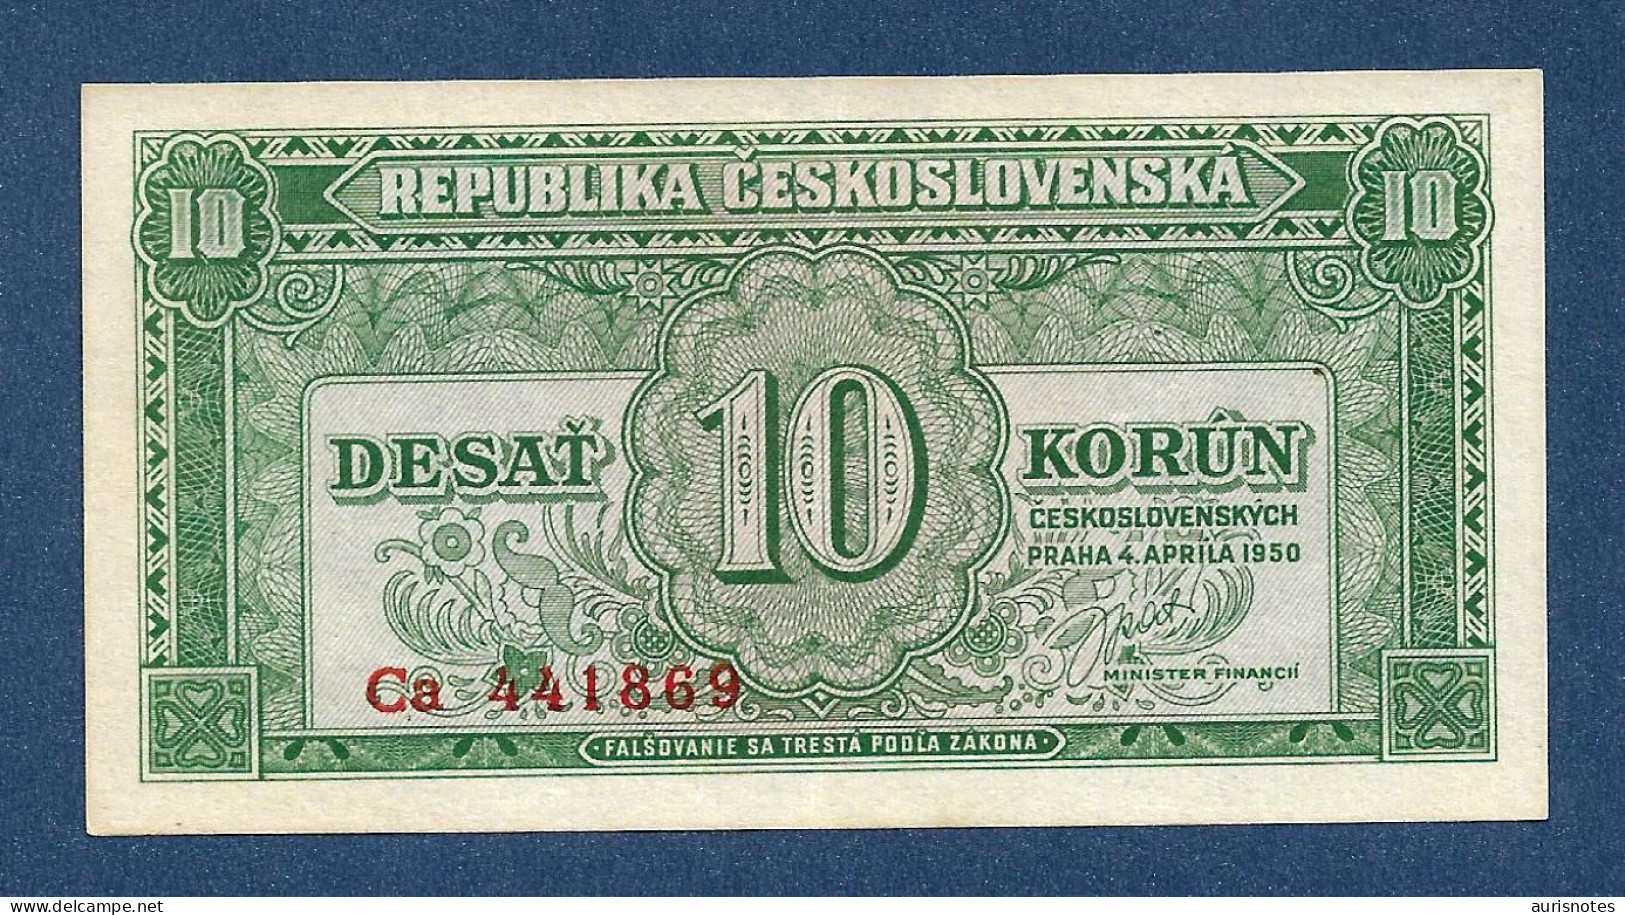 Czechoslovakia 10 Korun 1950 Not Perforated P69a UNC- - Checoslovaquia